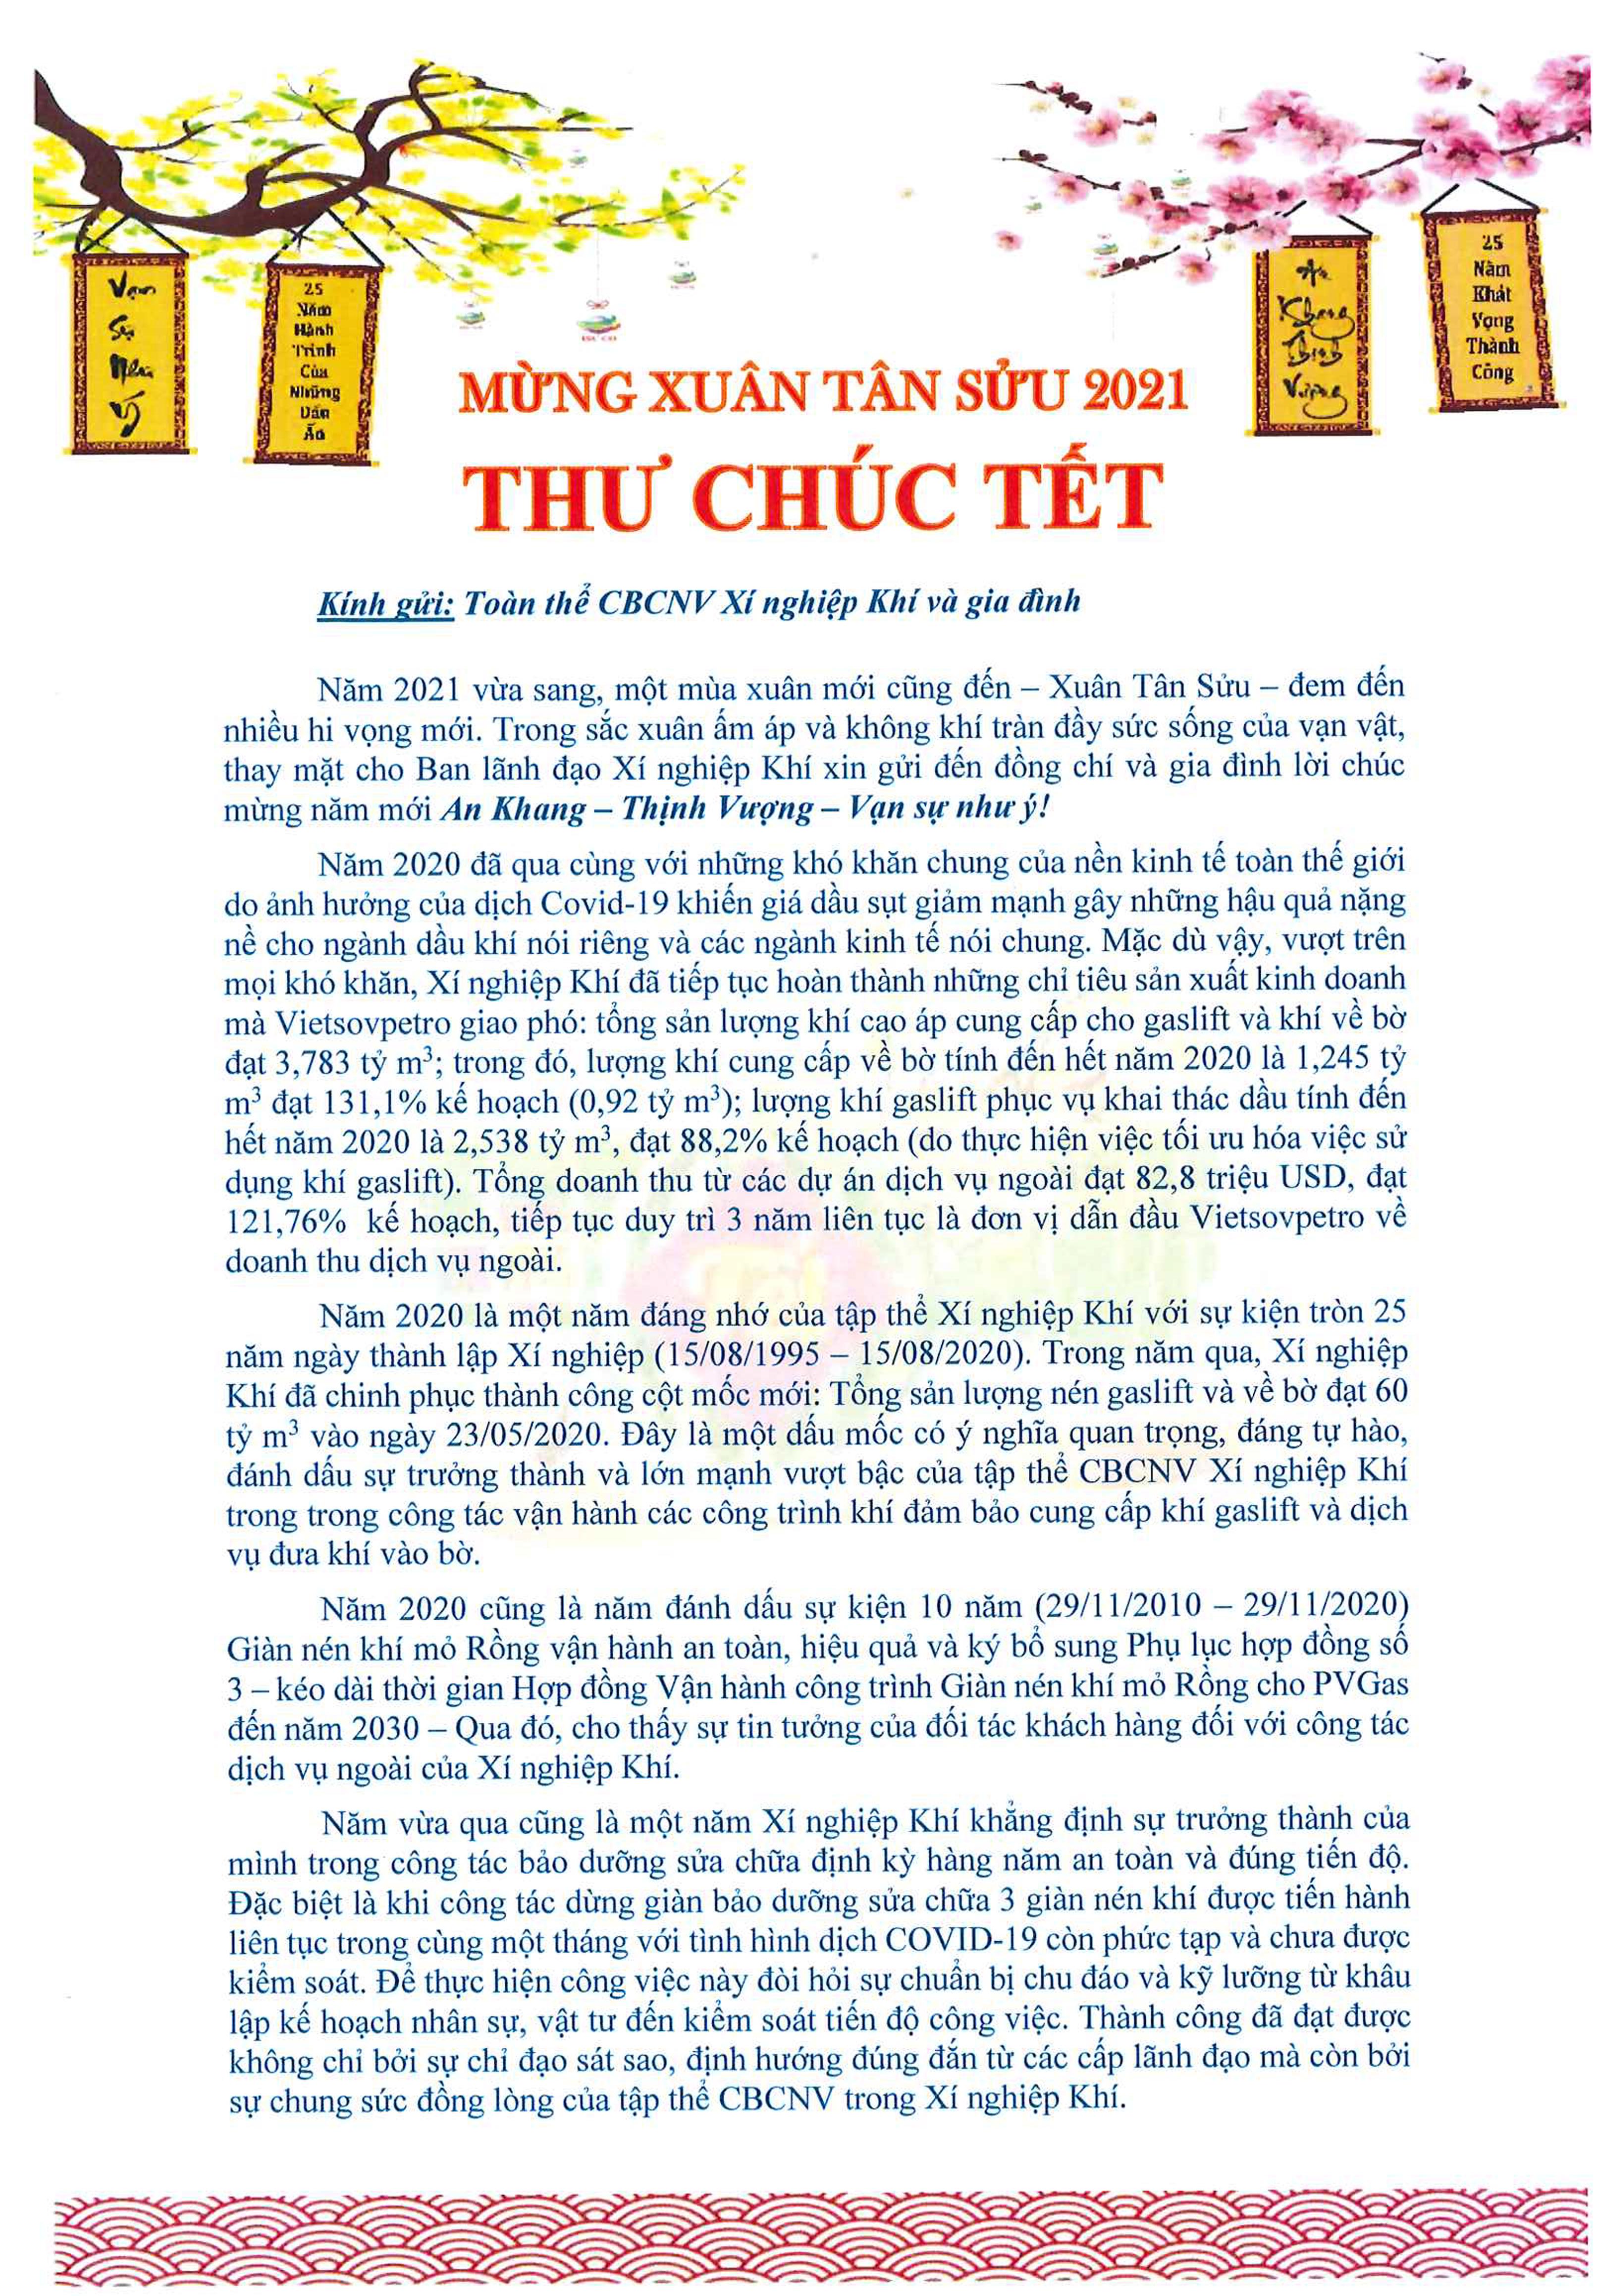 Thu chuc Tet Tan Suu 2021 - 0001.jpg